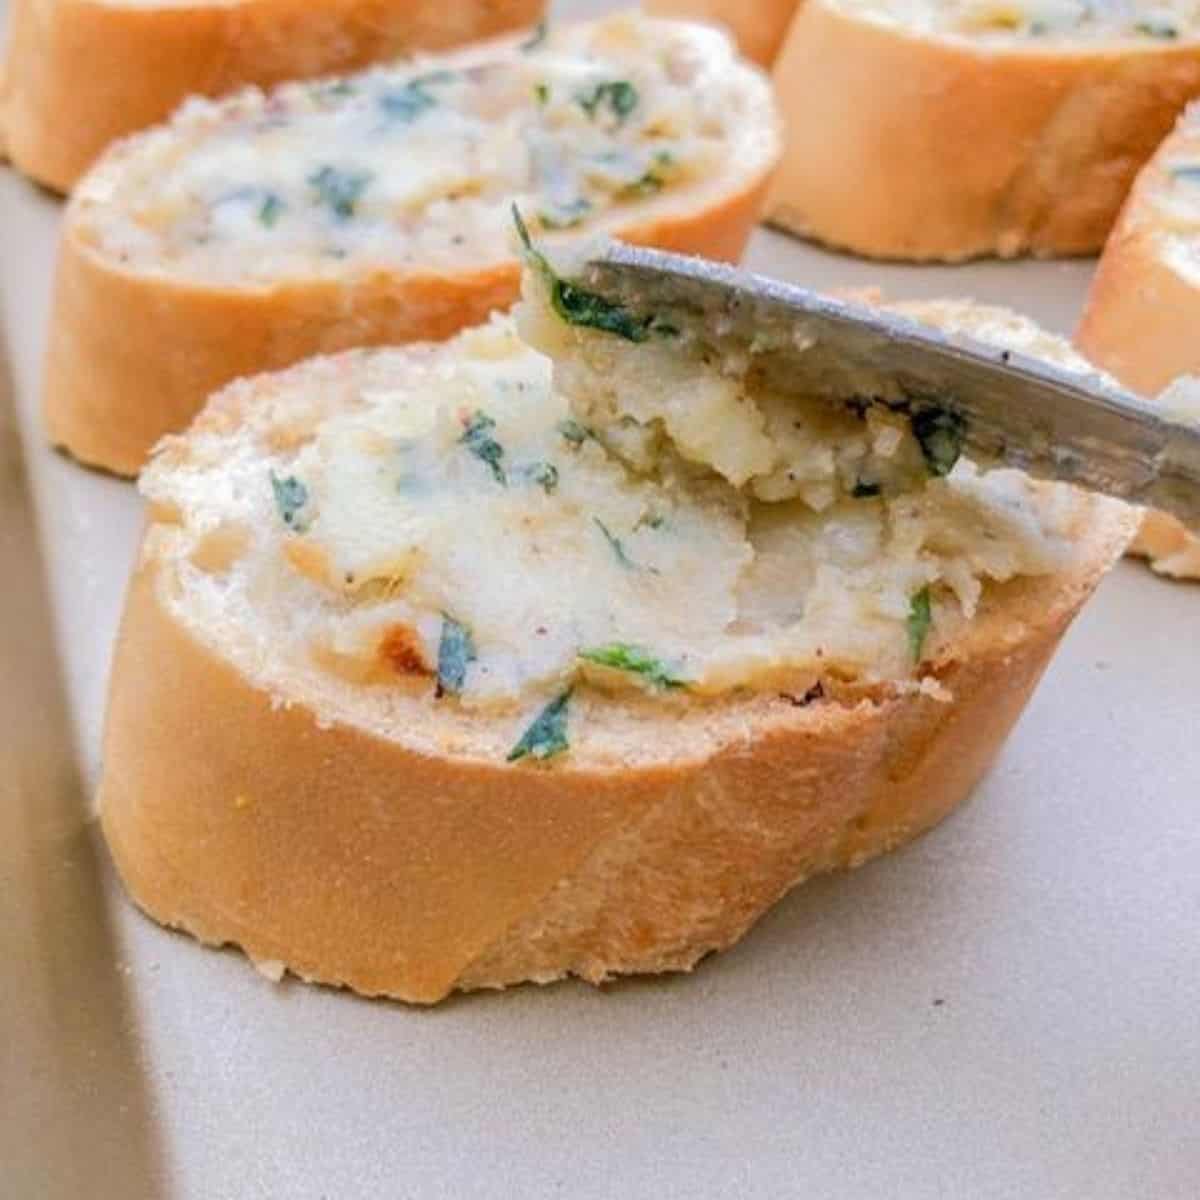 Spreading garlic butter onto bread.